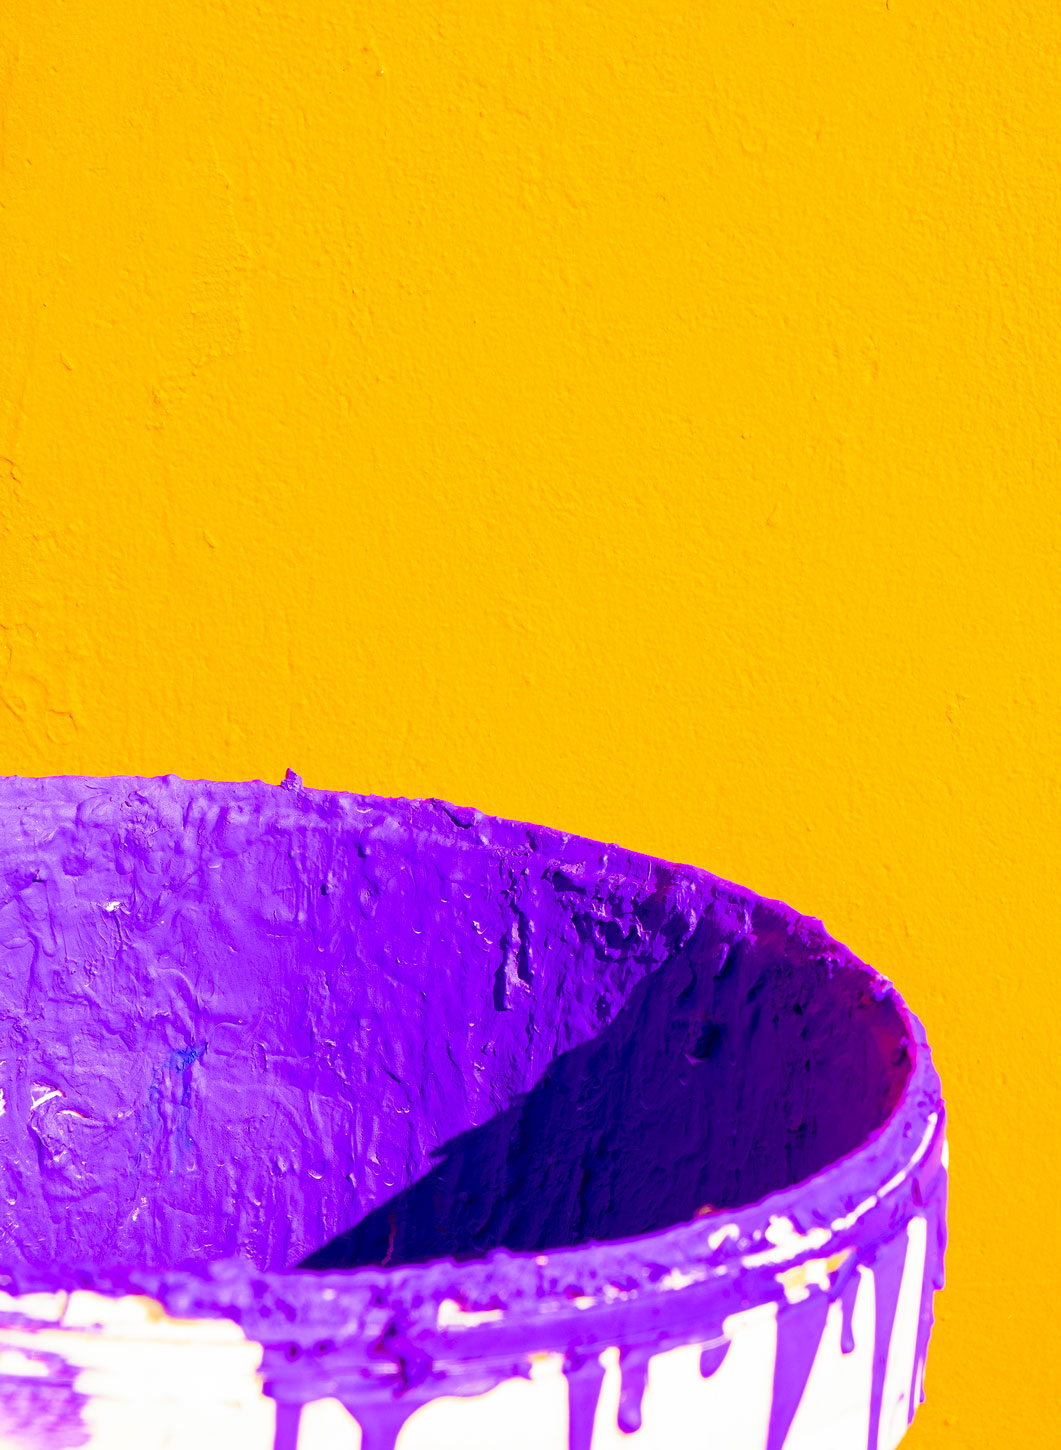 creative-stylish-wallpaper-purple-paint-and-yello-2021-09-09-01-15-47-utc.jpg